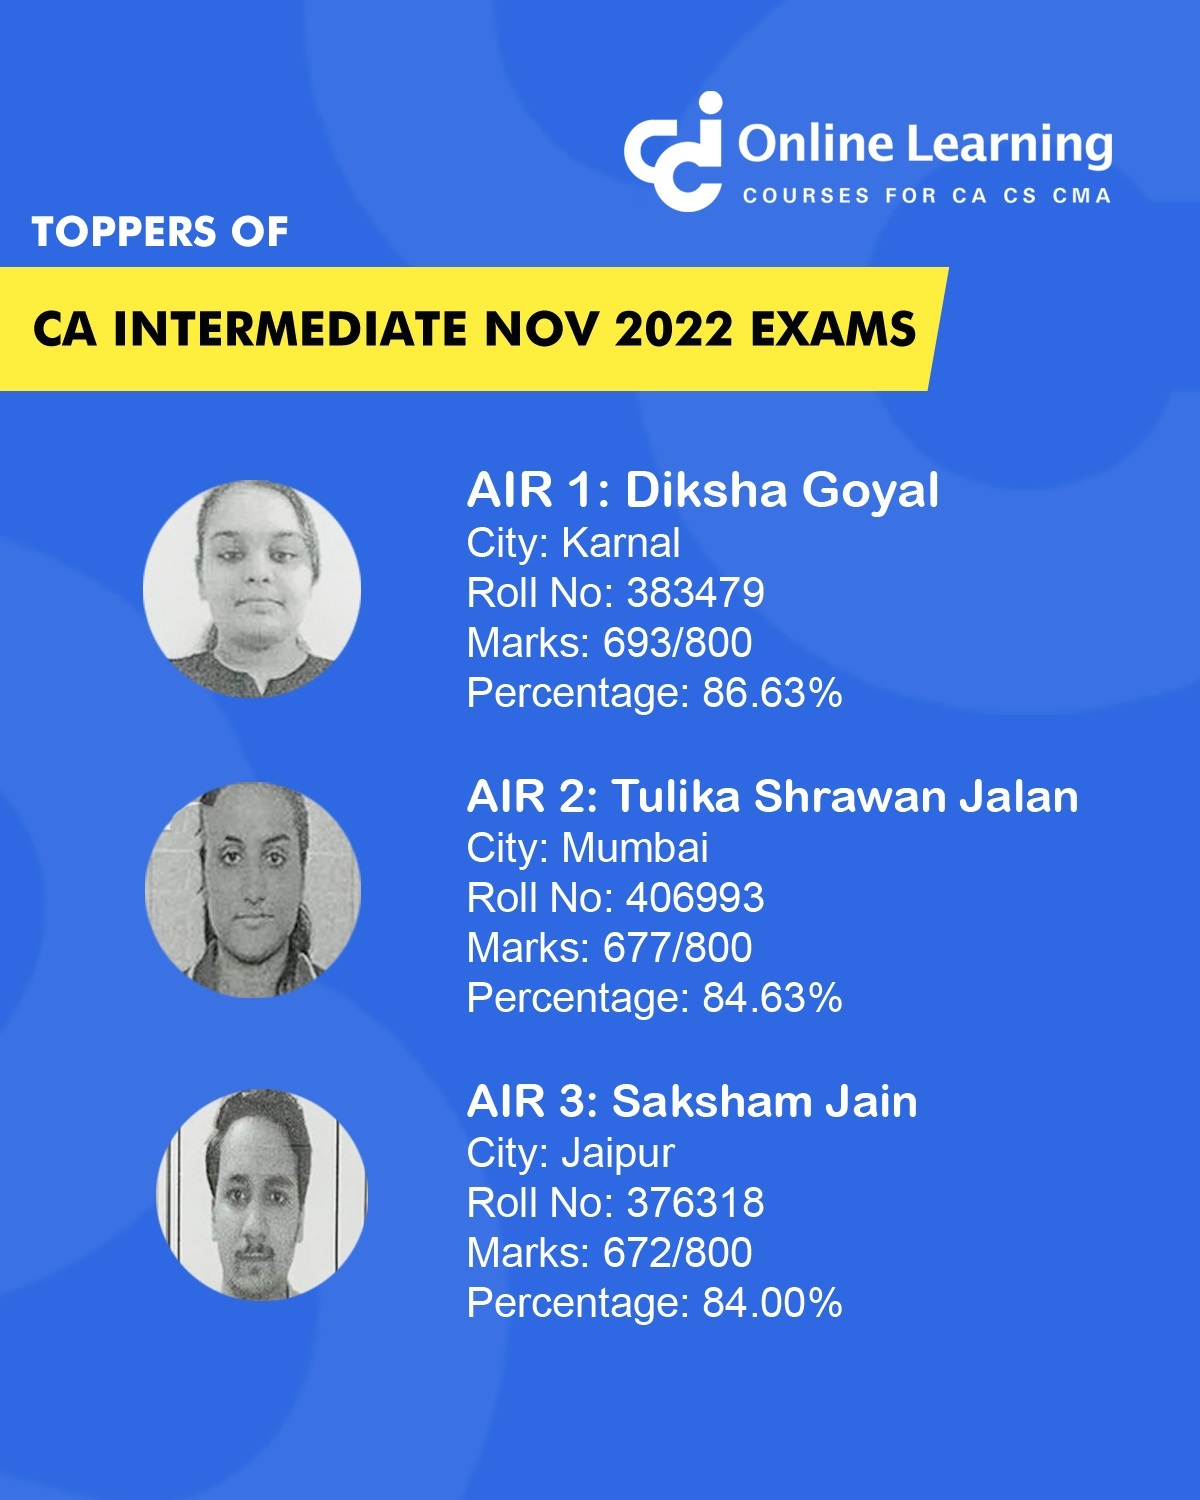 Toppers & Pass Percentage of CA Intermediate Nov 2022 Exams